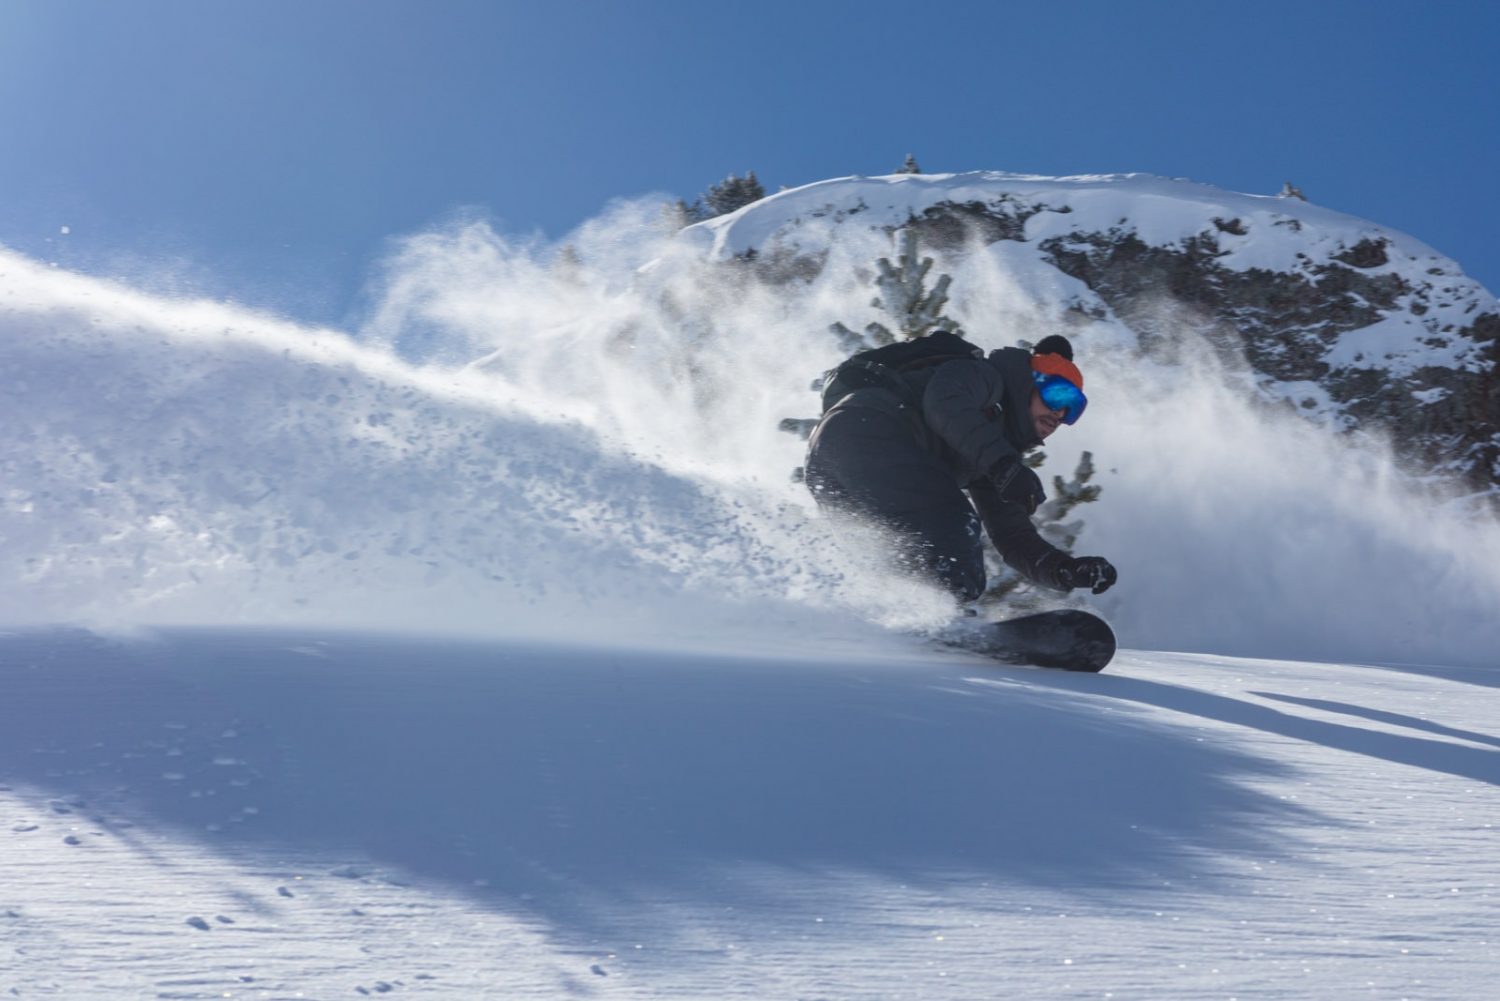 Snow Cab snowboarder riding powder